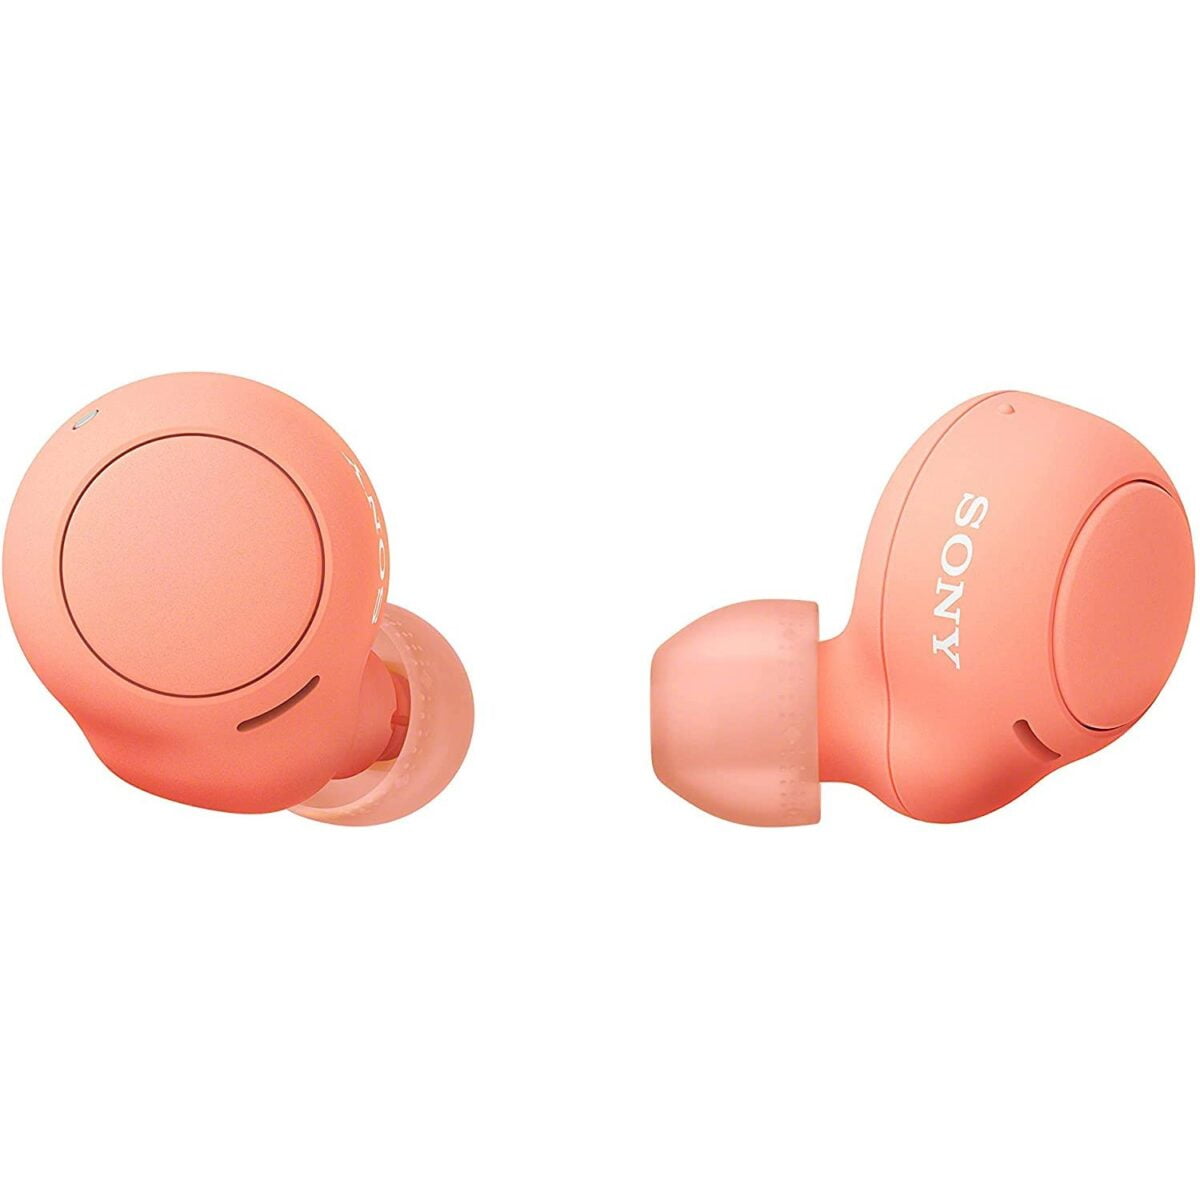 Sony wf c500 bluetooth truly wireless in ear earbuds 1 sony wf c500